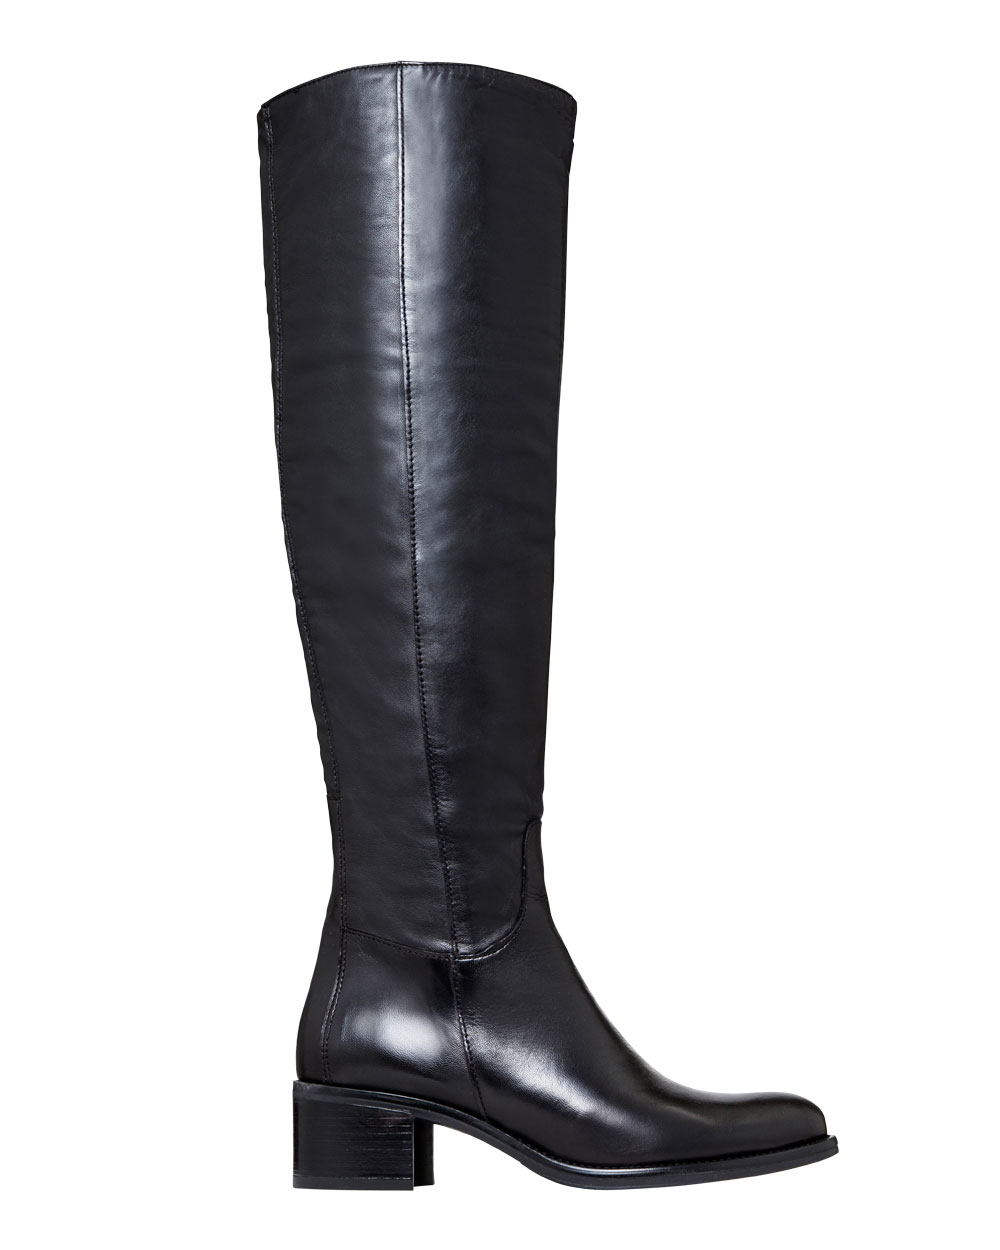 Overland knee-high boots